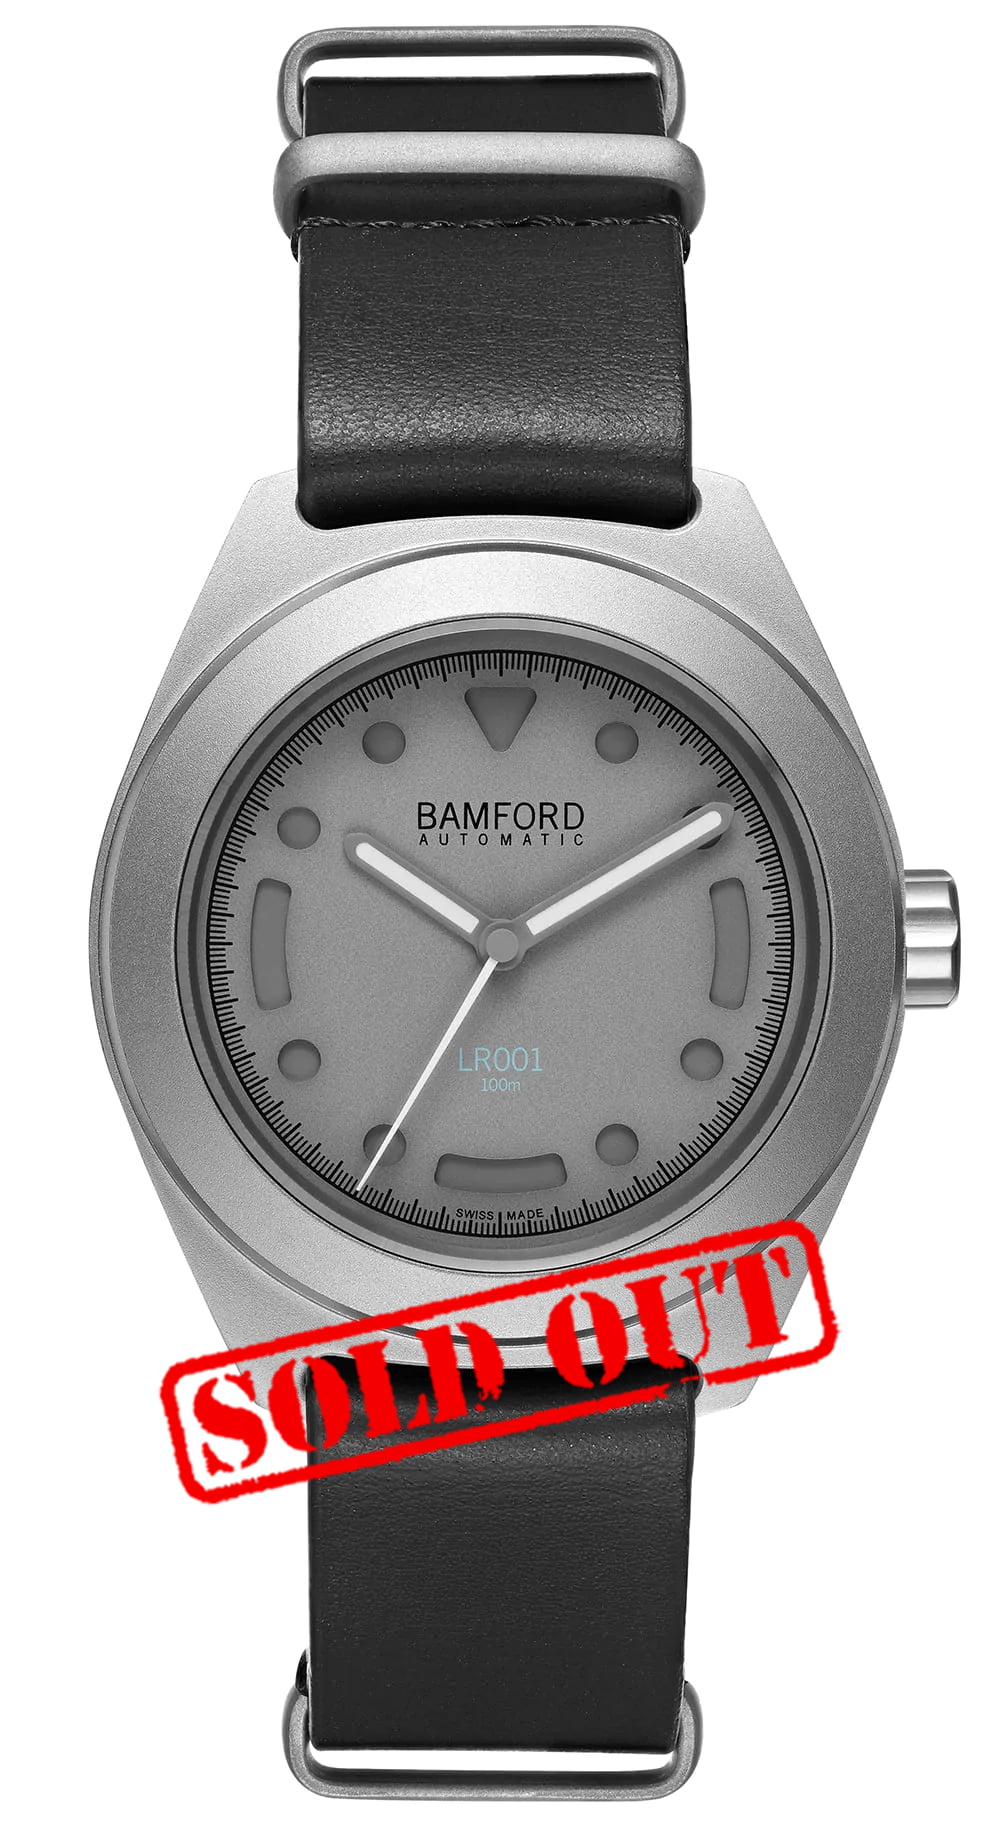 Bamford G-SHOCK 6900 – Bamford London